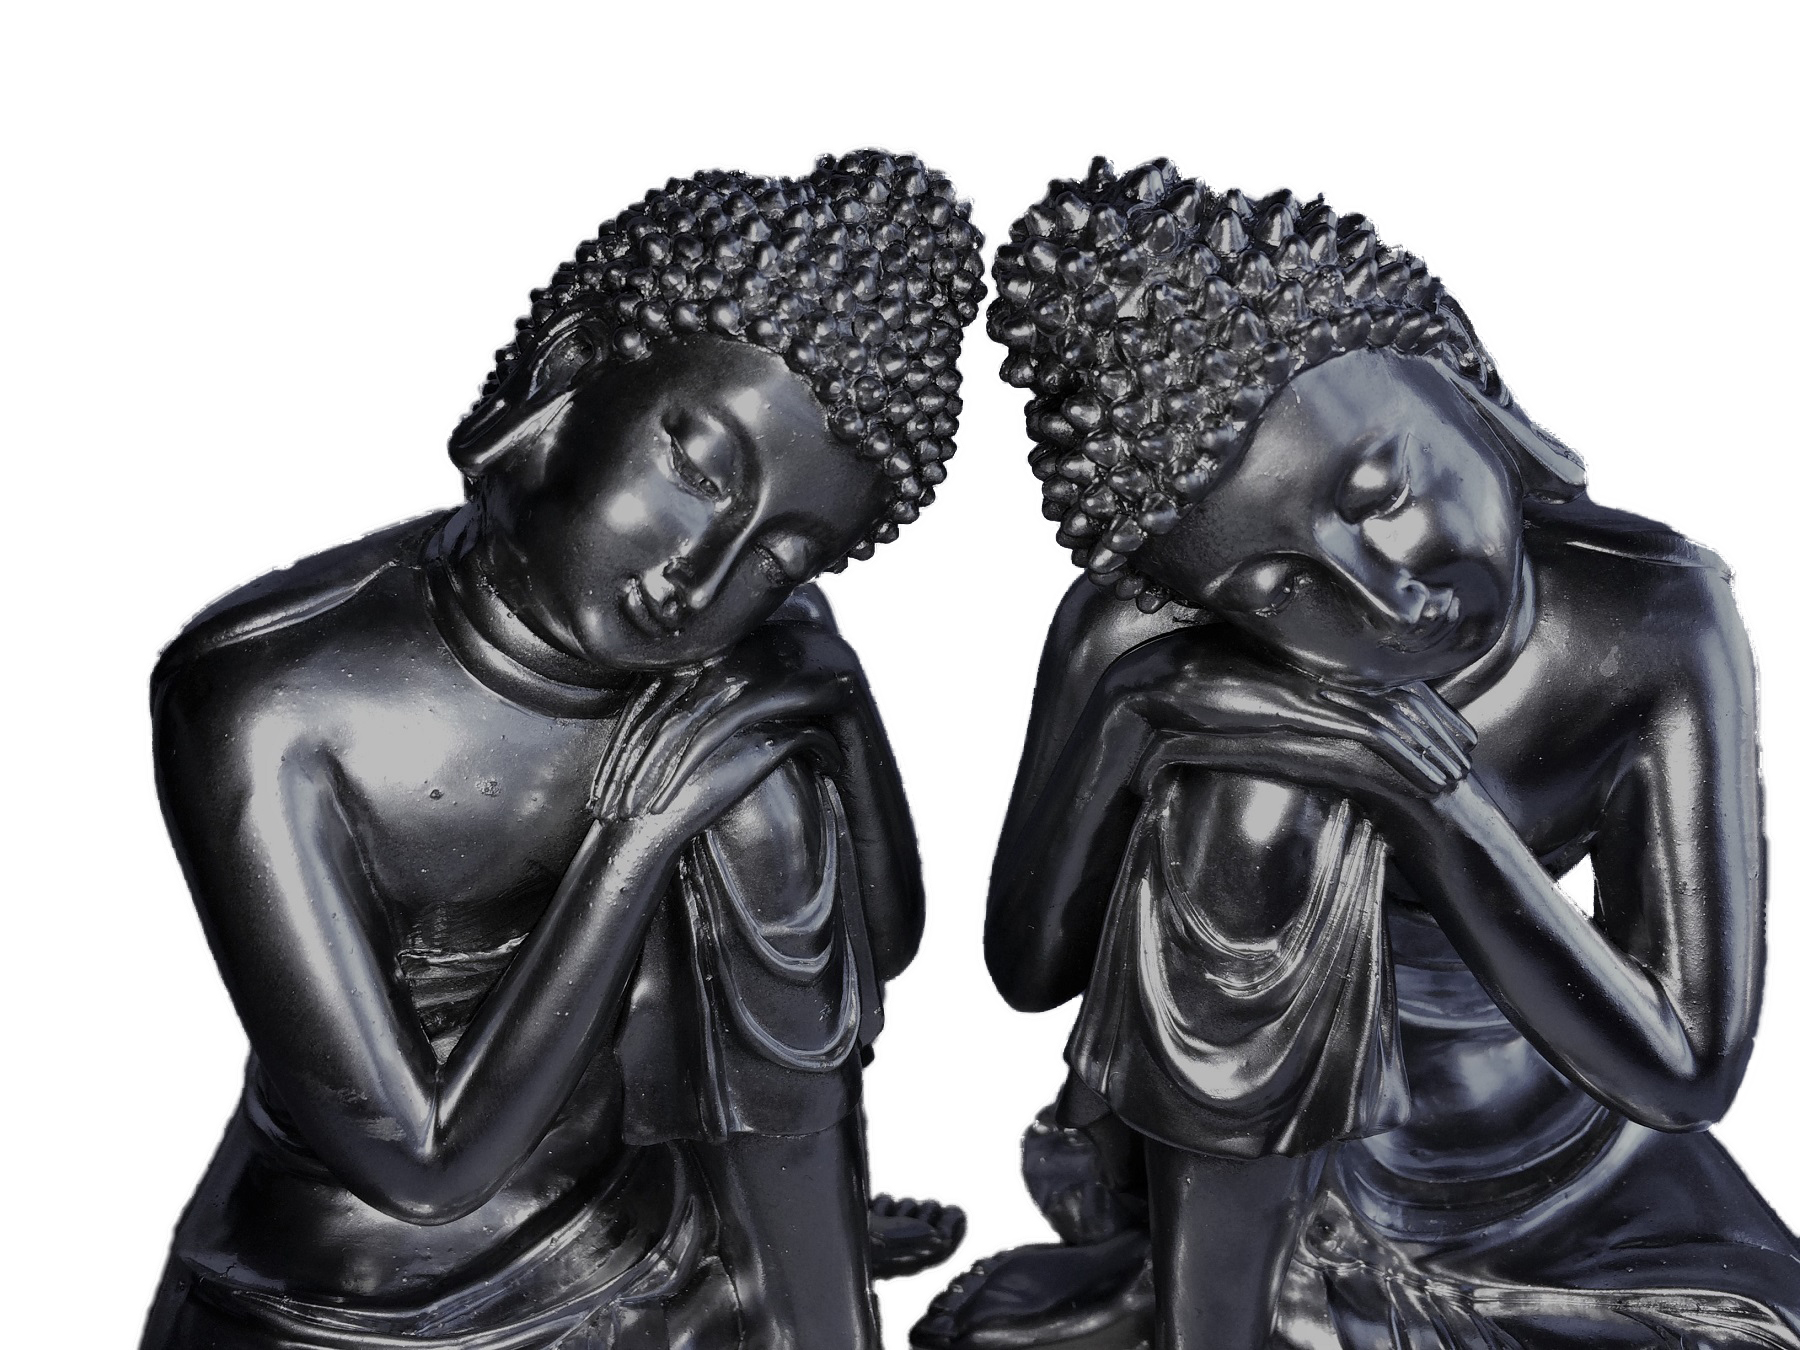 grand-duo-bouddha-penseur-argent-pei-17727-bud111duoargent-1492866885